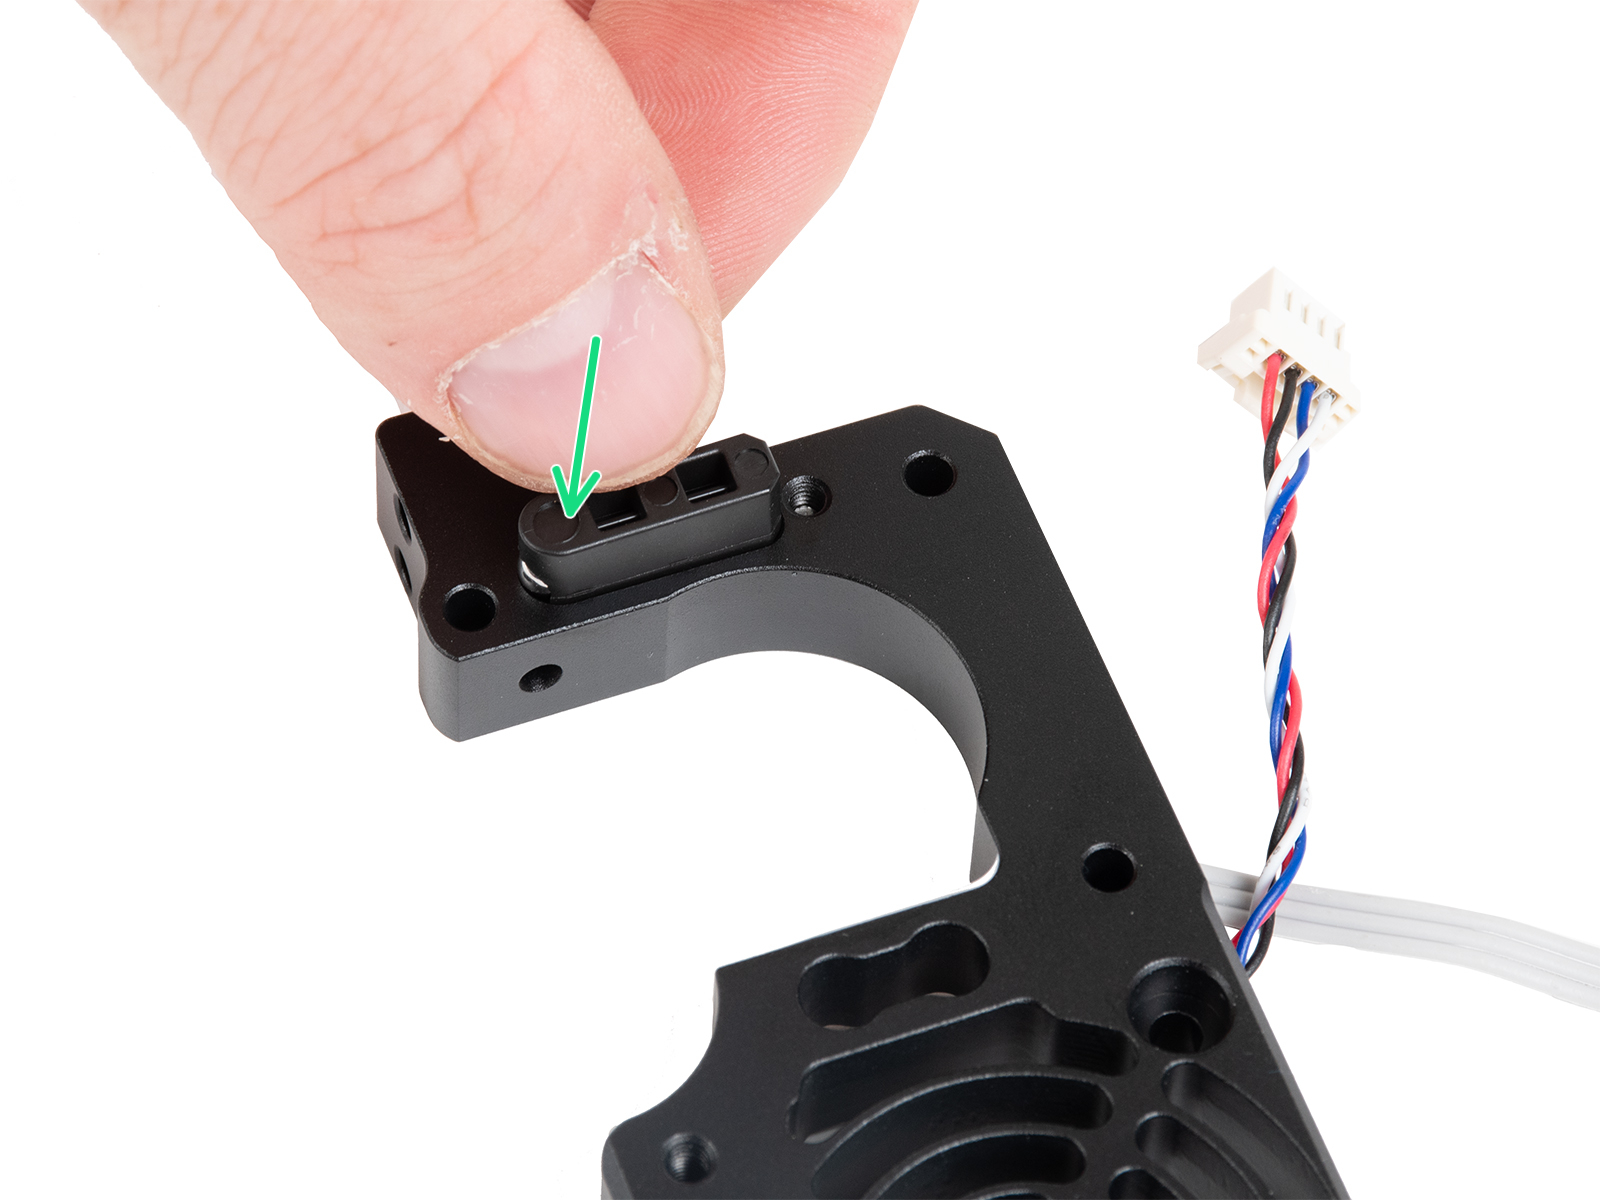 Assembling the filament sensor